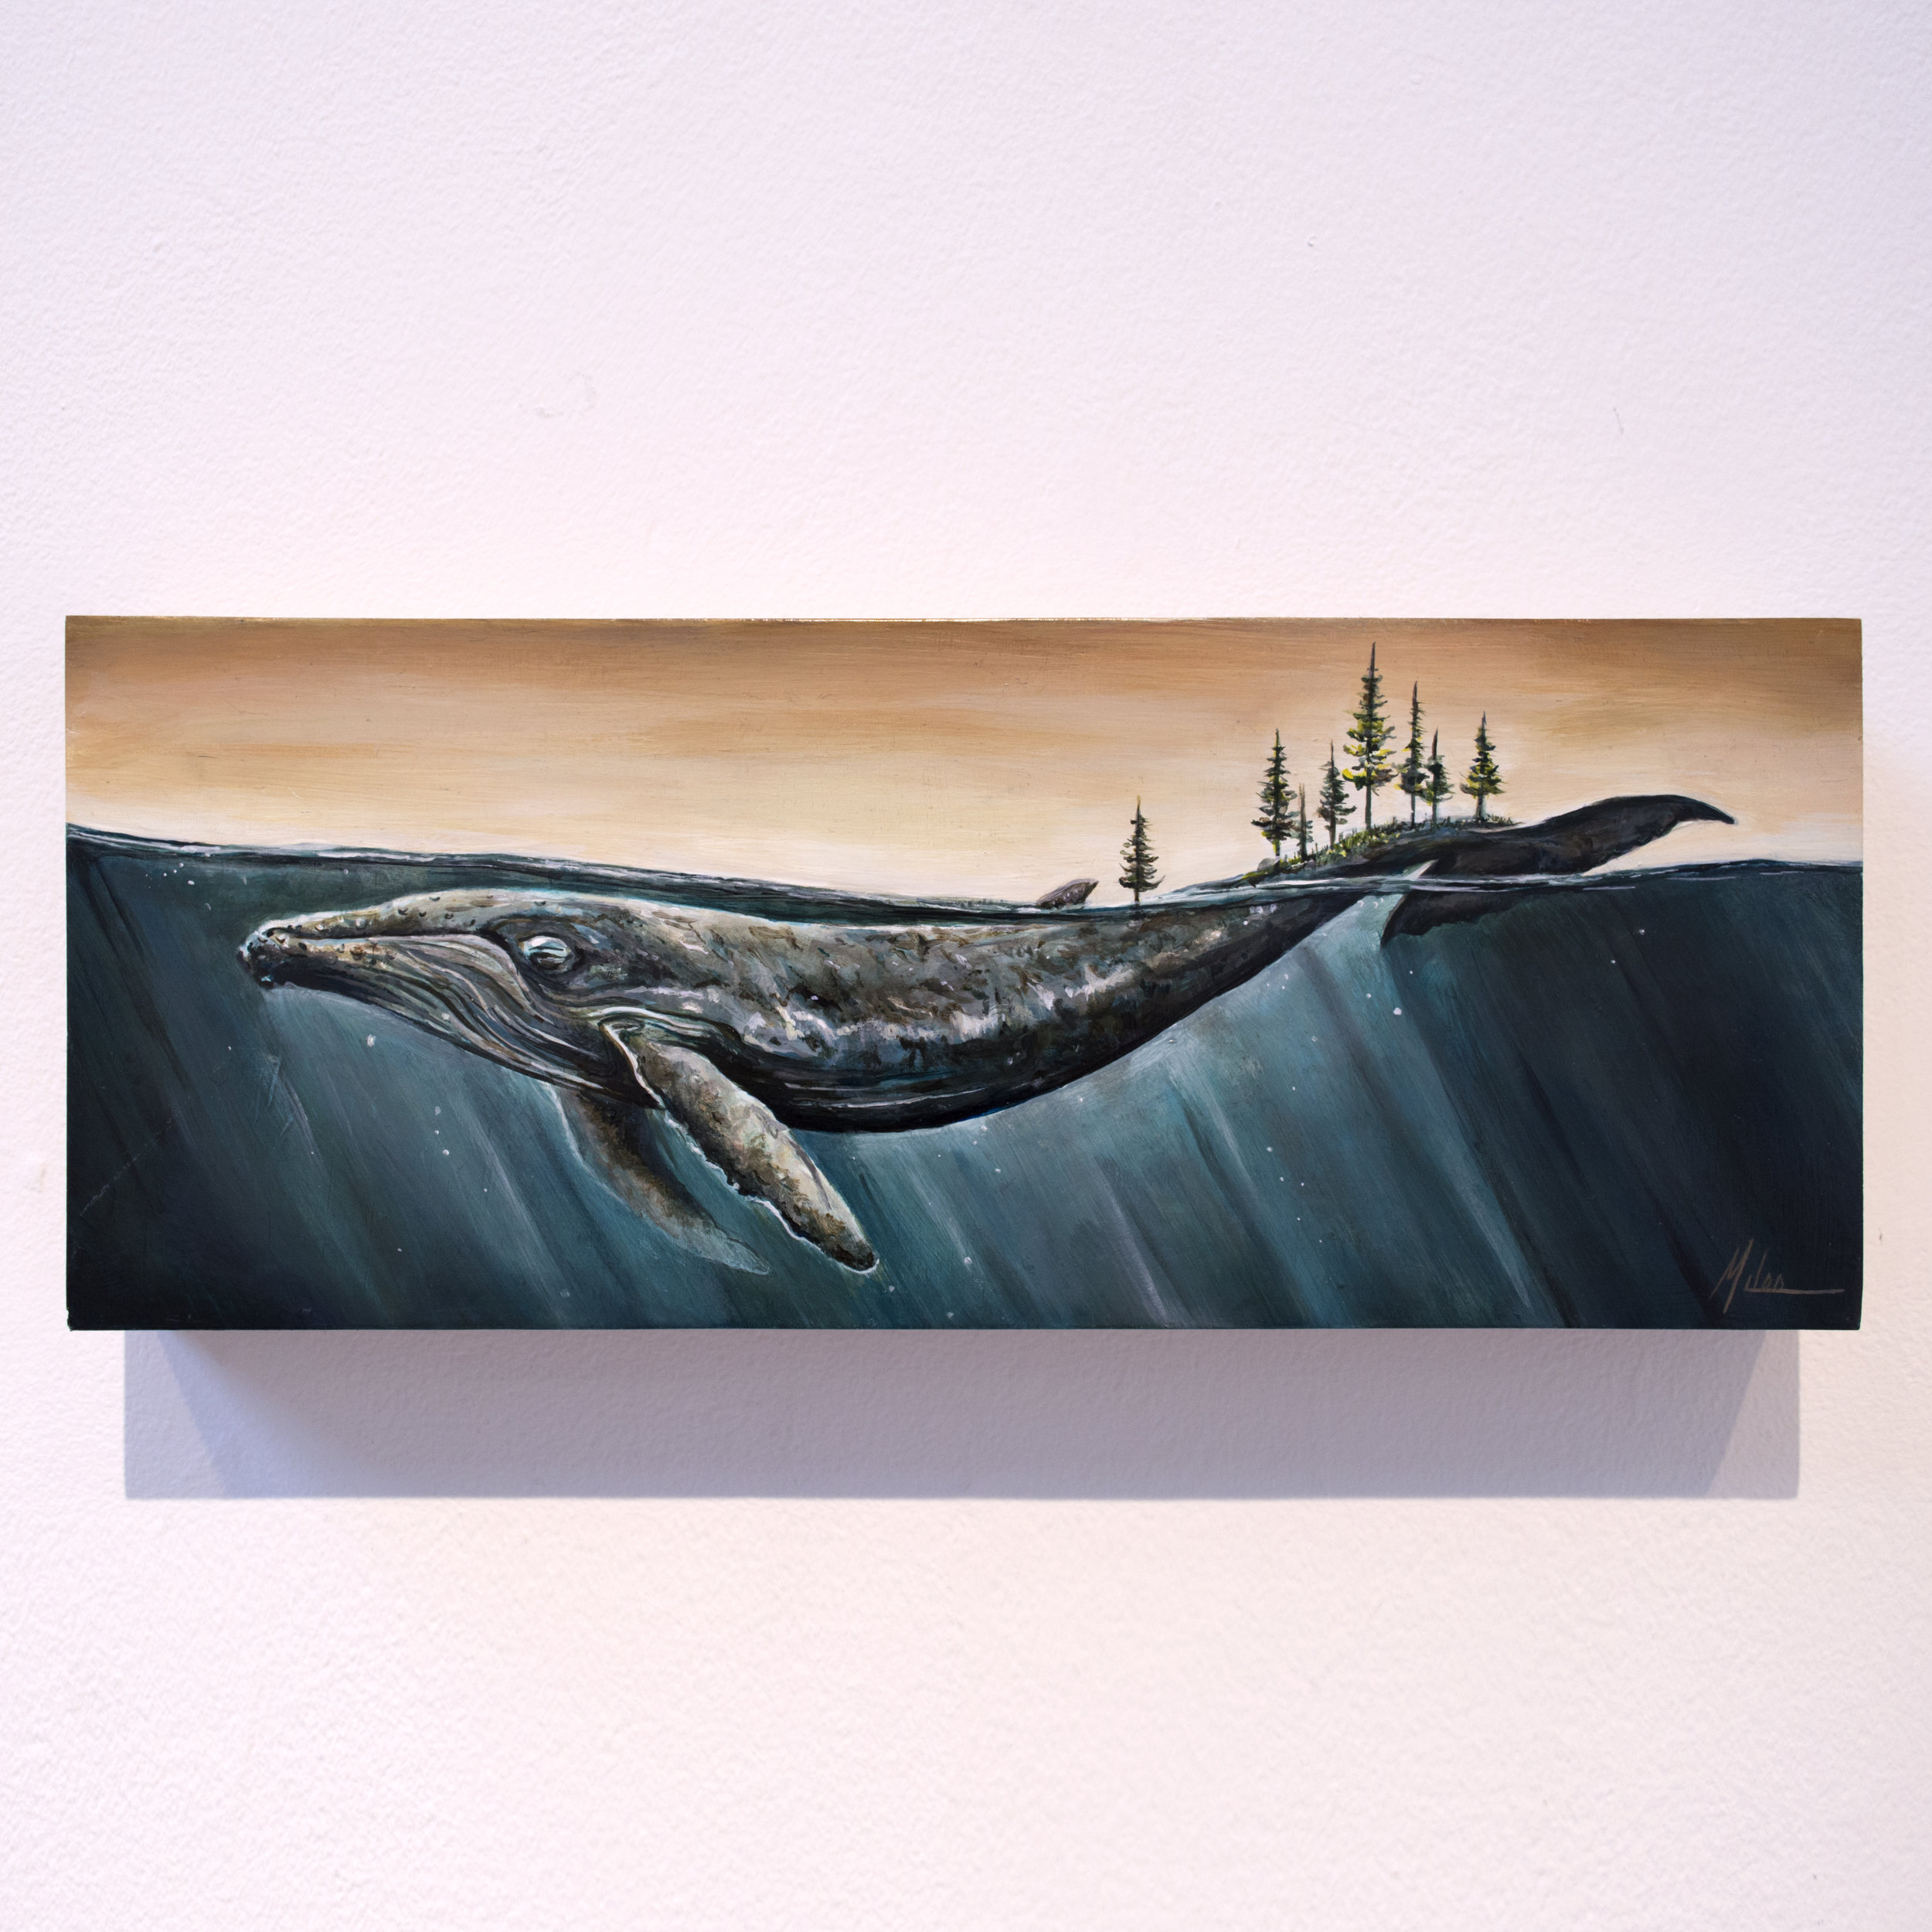   Island Carrier   acrylic on panel  15” x 6” 